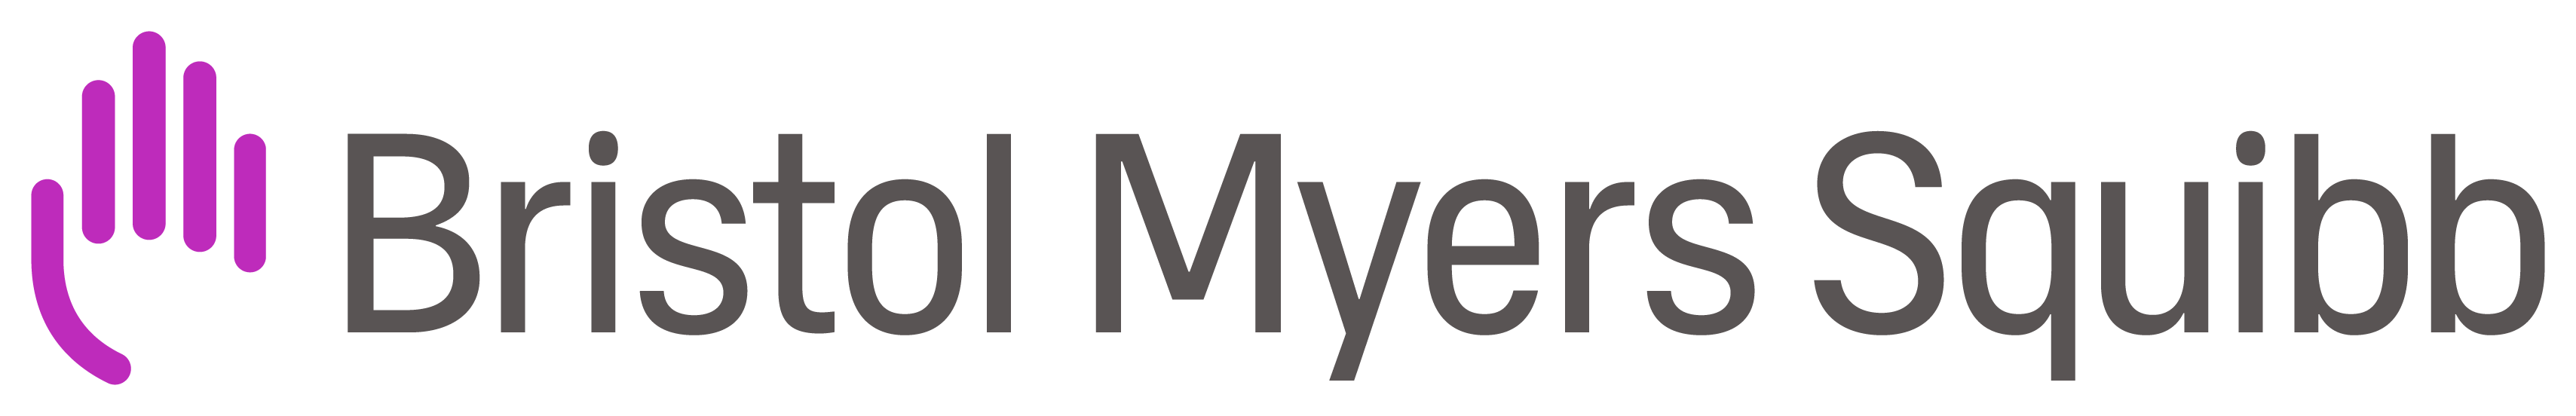 bristol myers squibb logo for hidradénite suppurée.